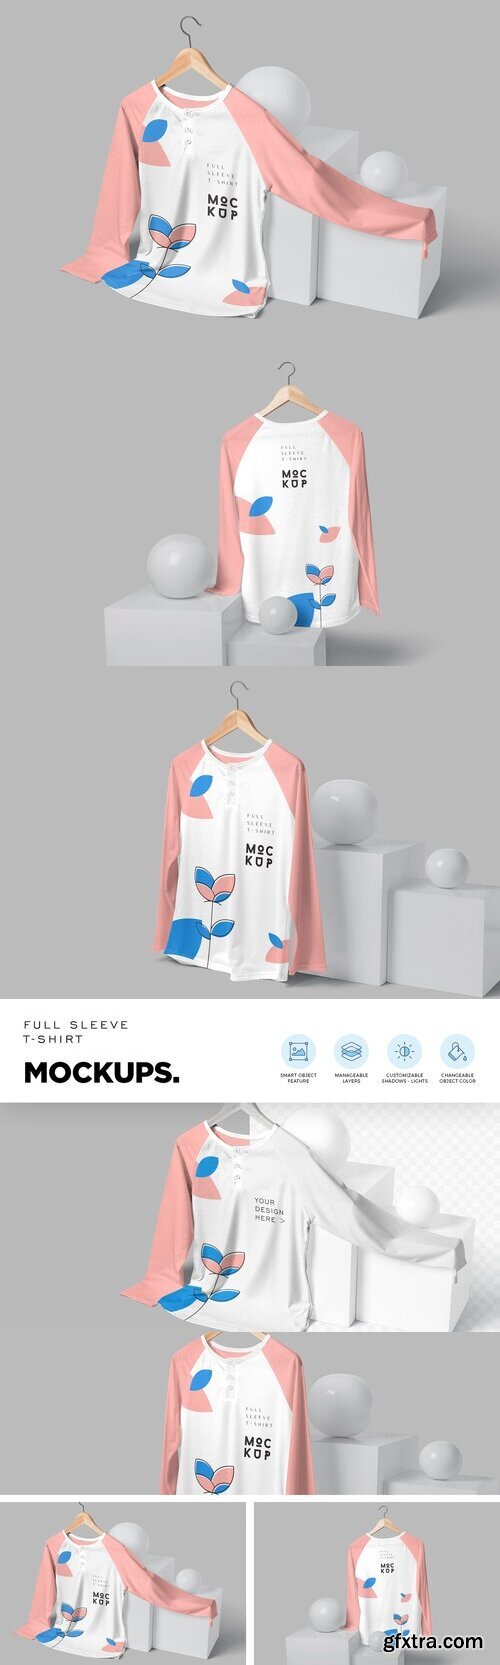 CreativeMarket - 3 Button Full Sleeve T-Shirt Mockups 6703765